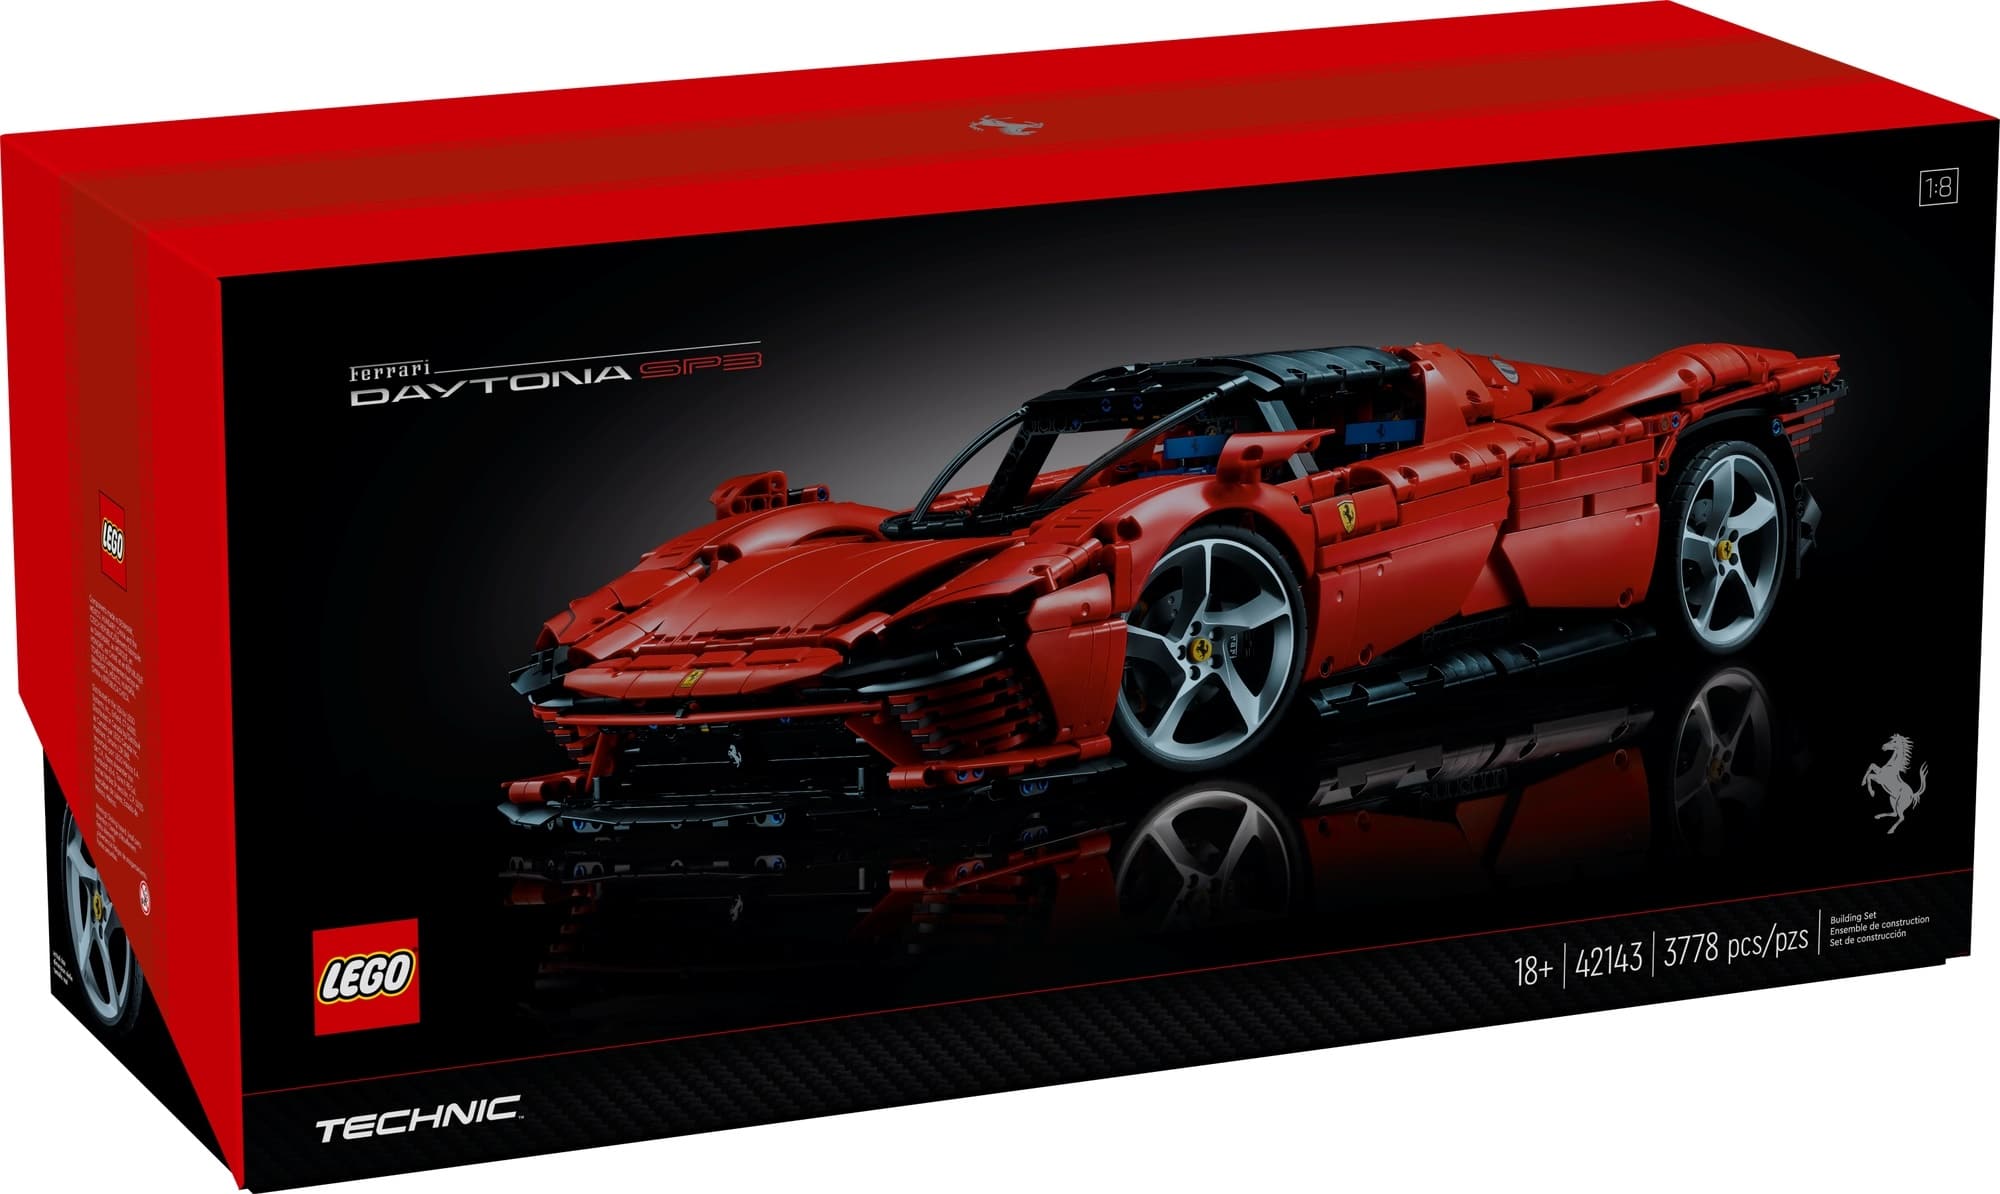 LEGO Technic 42143 Ferrari Daytona Sp3 2